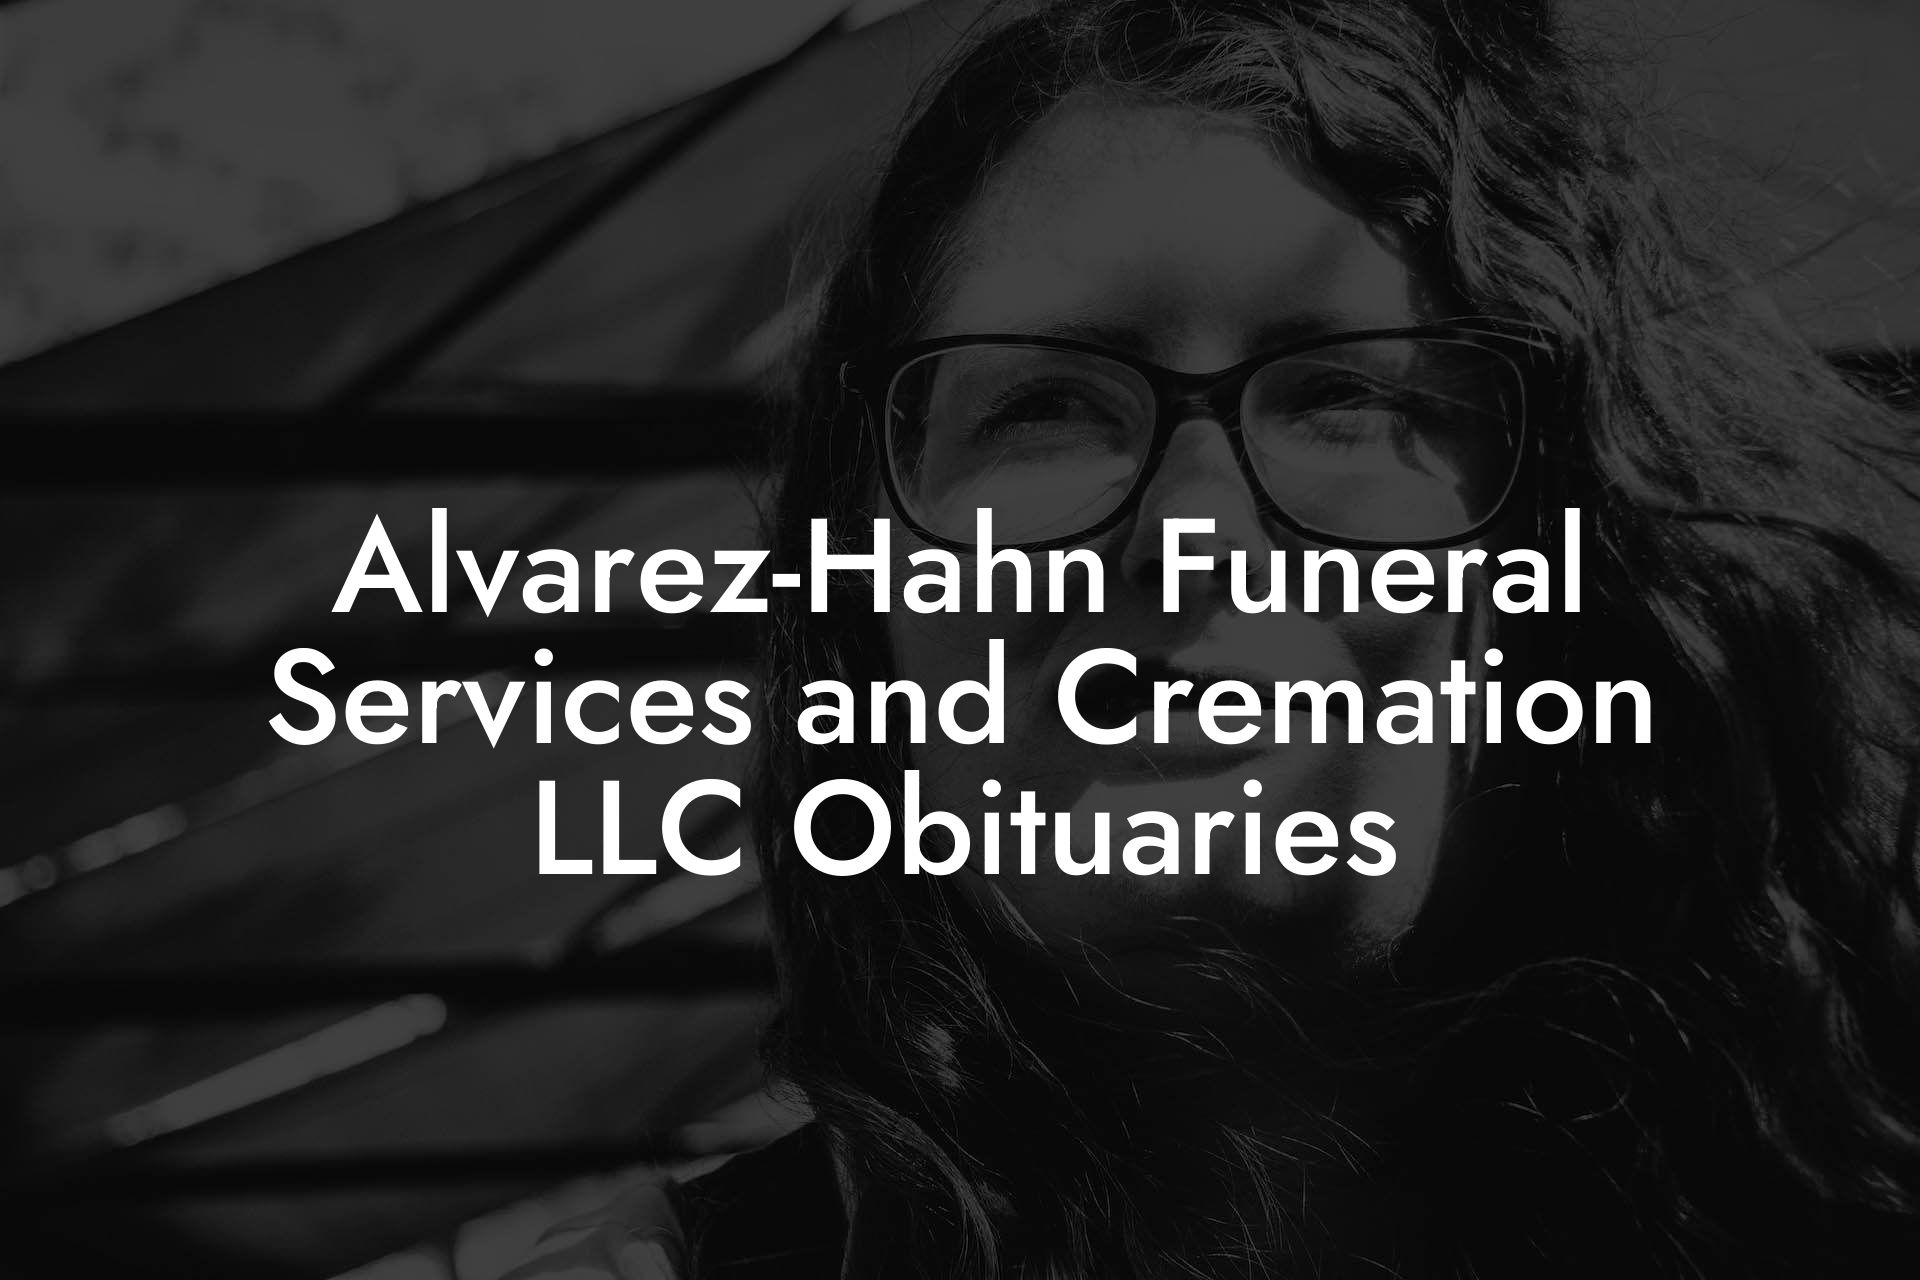 Alvarez-Hahn Funeral Services and Cremation LLC Obituaries